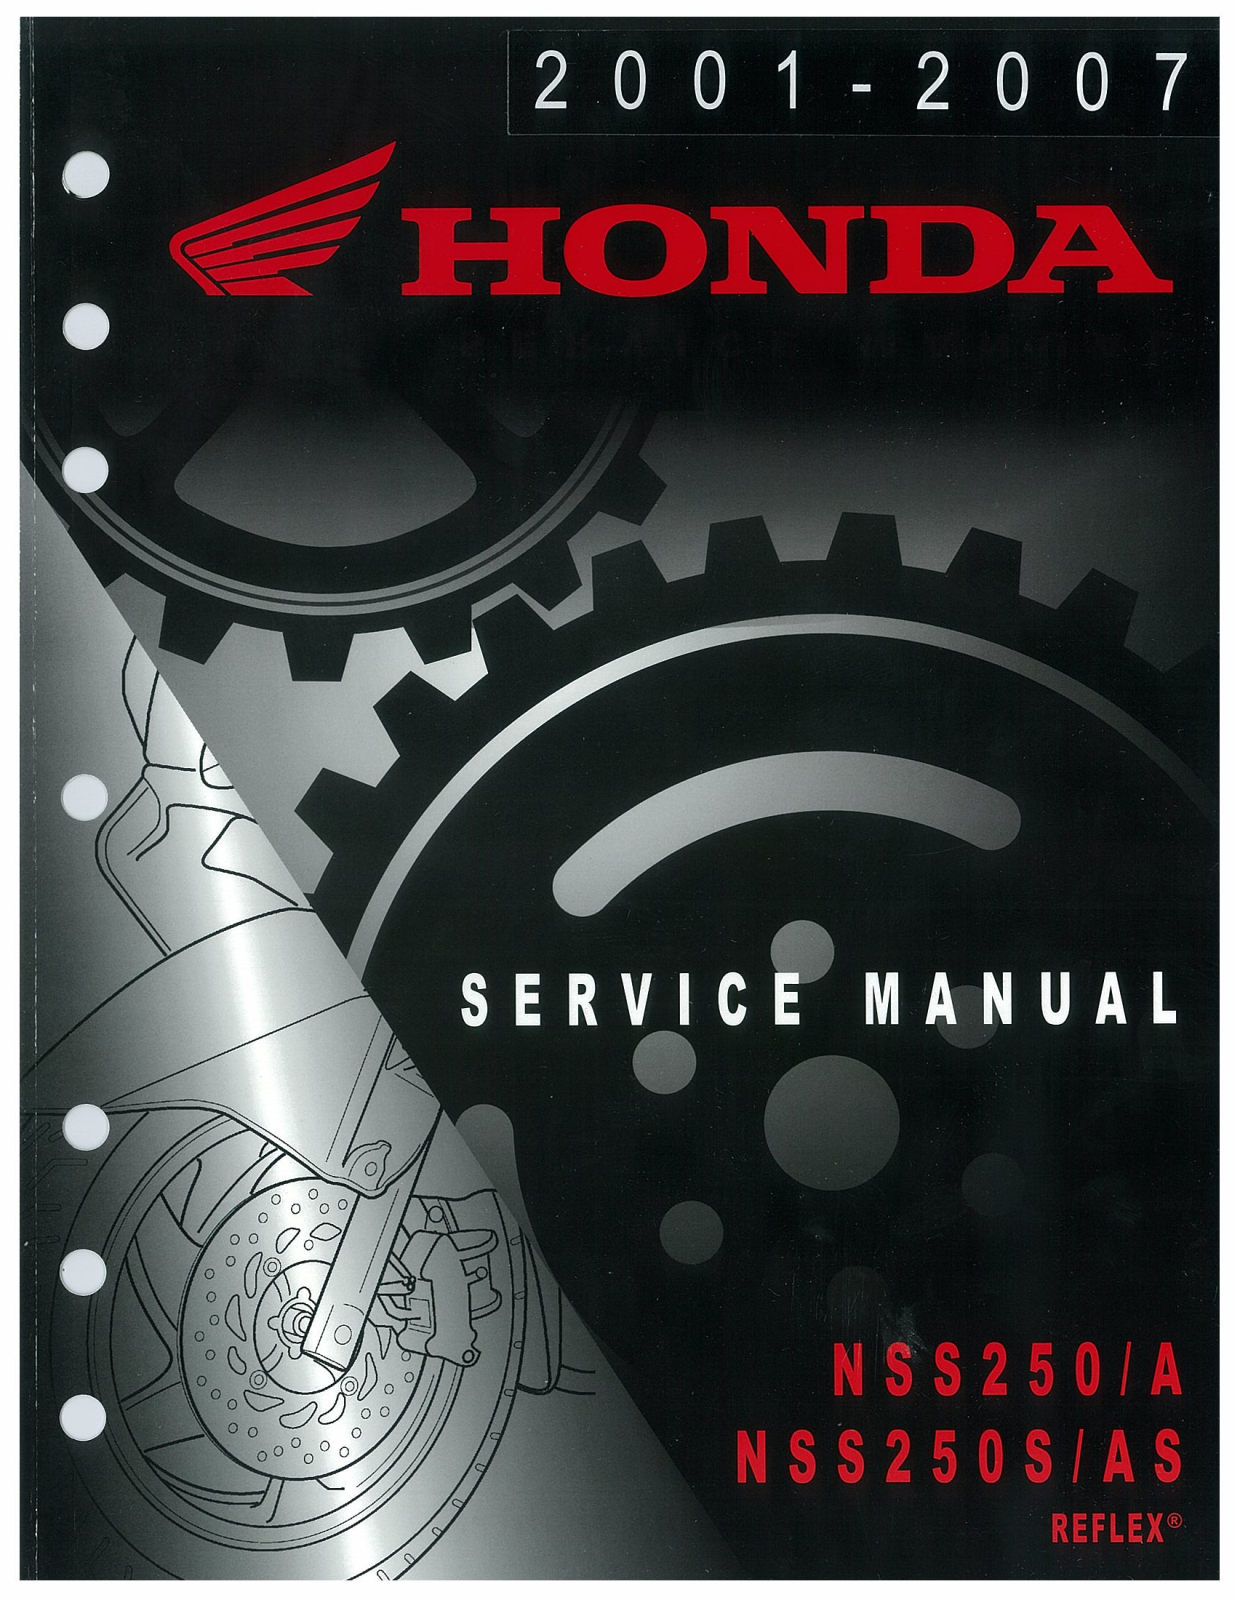 Honda NSS250S/AS, NSS250A Reflex (2001-2007), NSS250 Reflex (2001-2007), Forza 250, NSS250S Service Manual